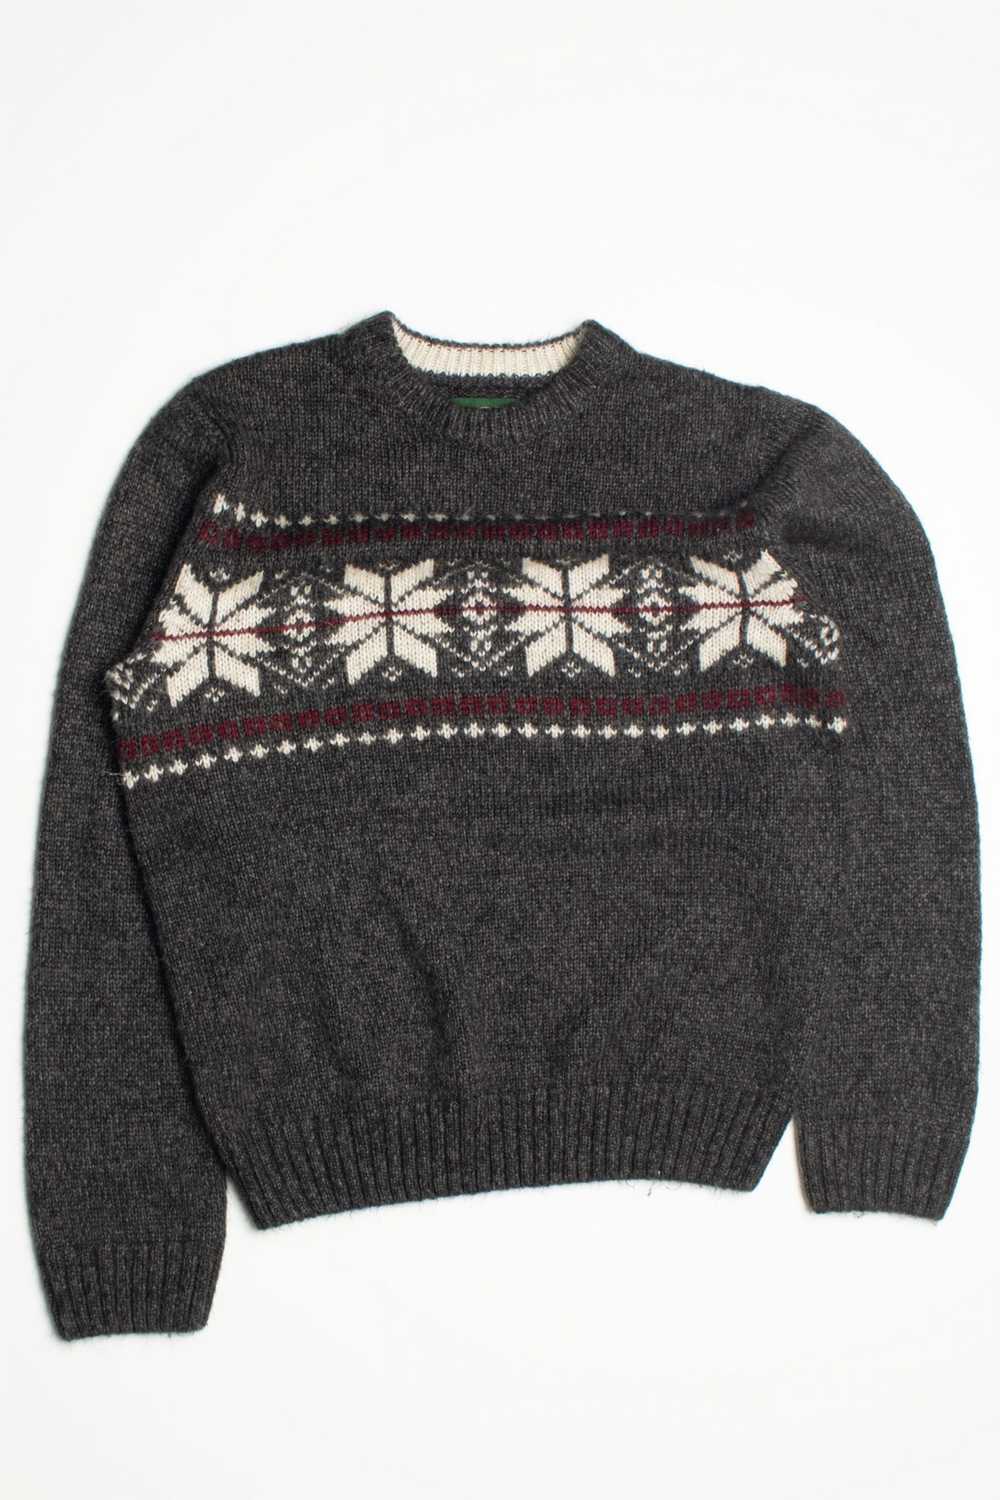 Vintage David Taylor Fair Isle Sweater - Gem